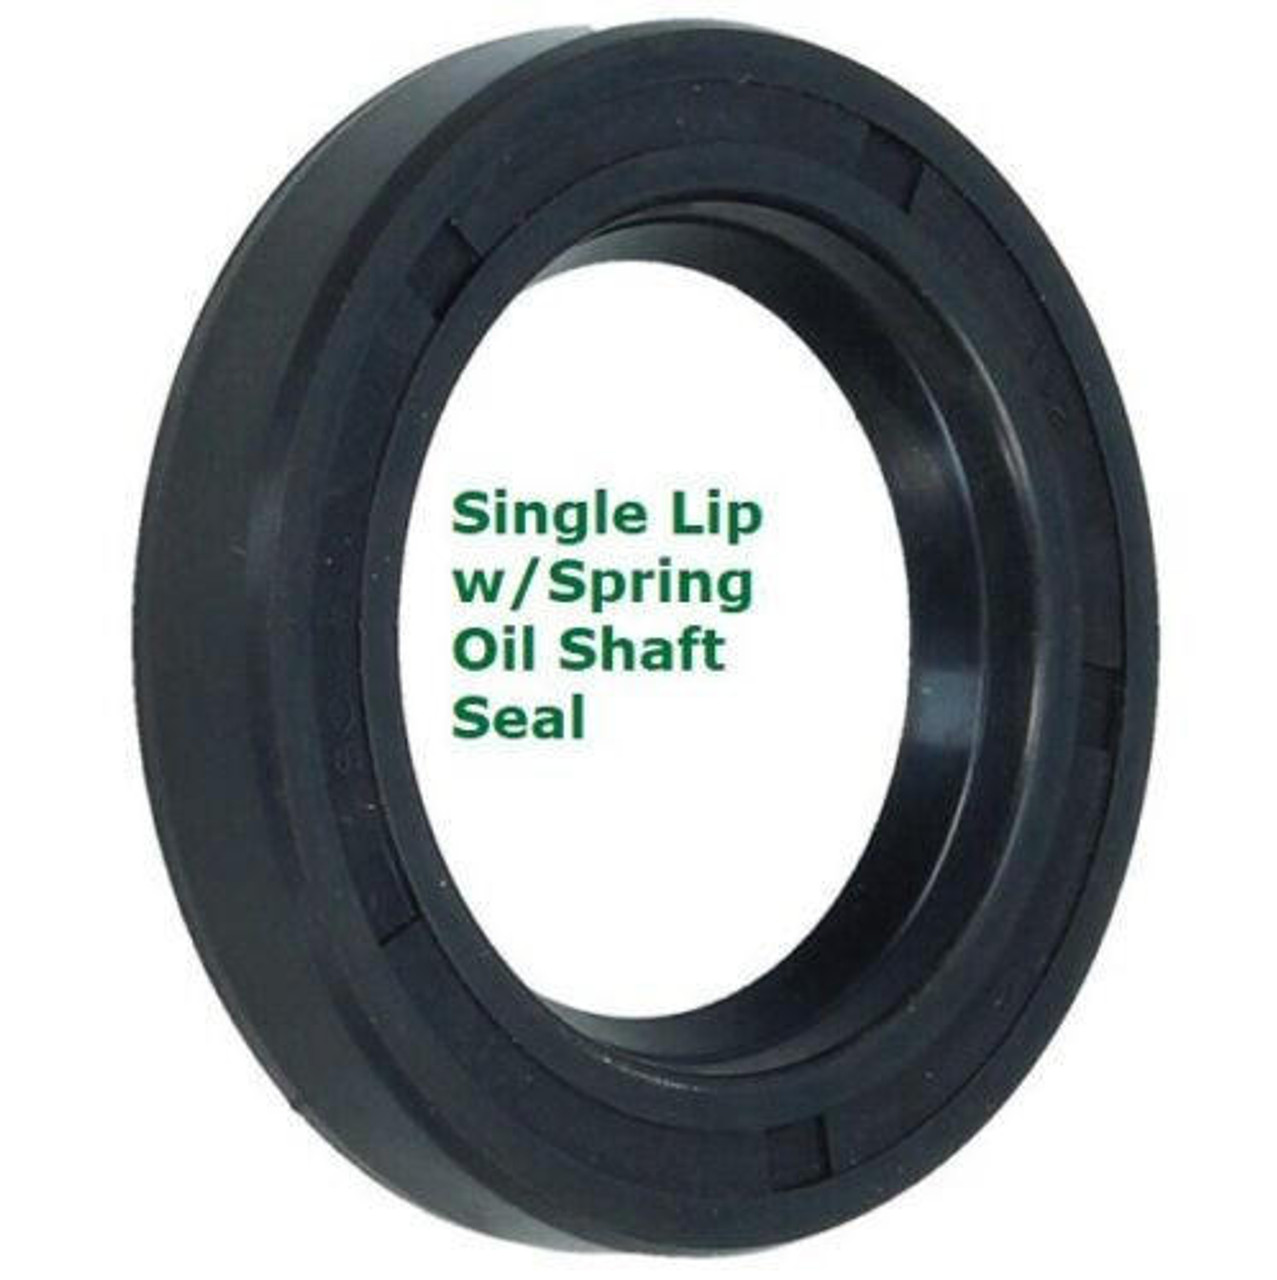 Metric Oil Shaft Seal 220 x 260 x 16mm   Single Lip   Price for 1 pc